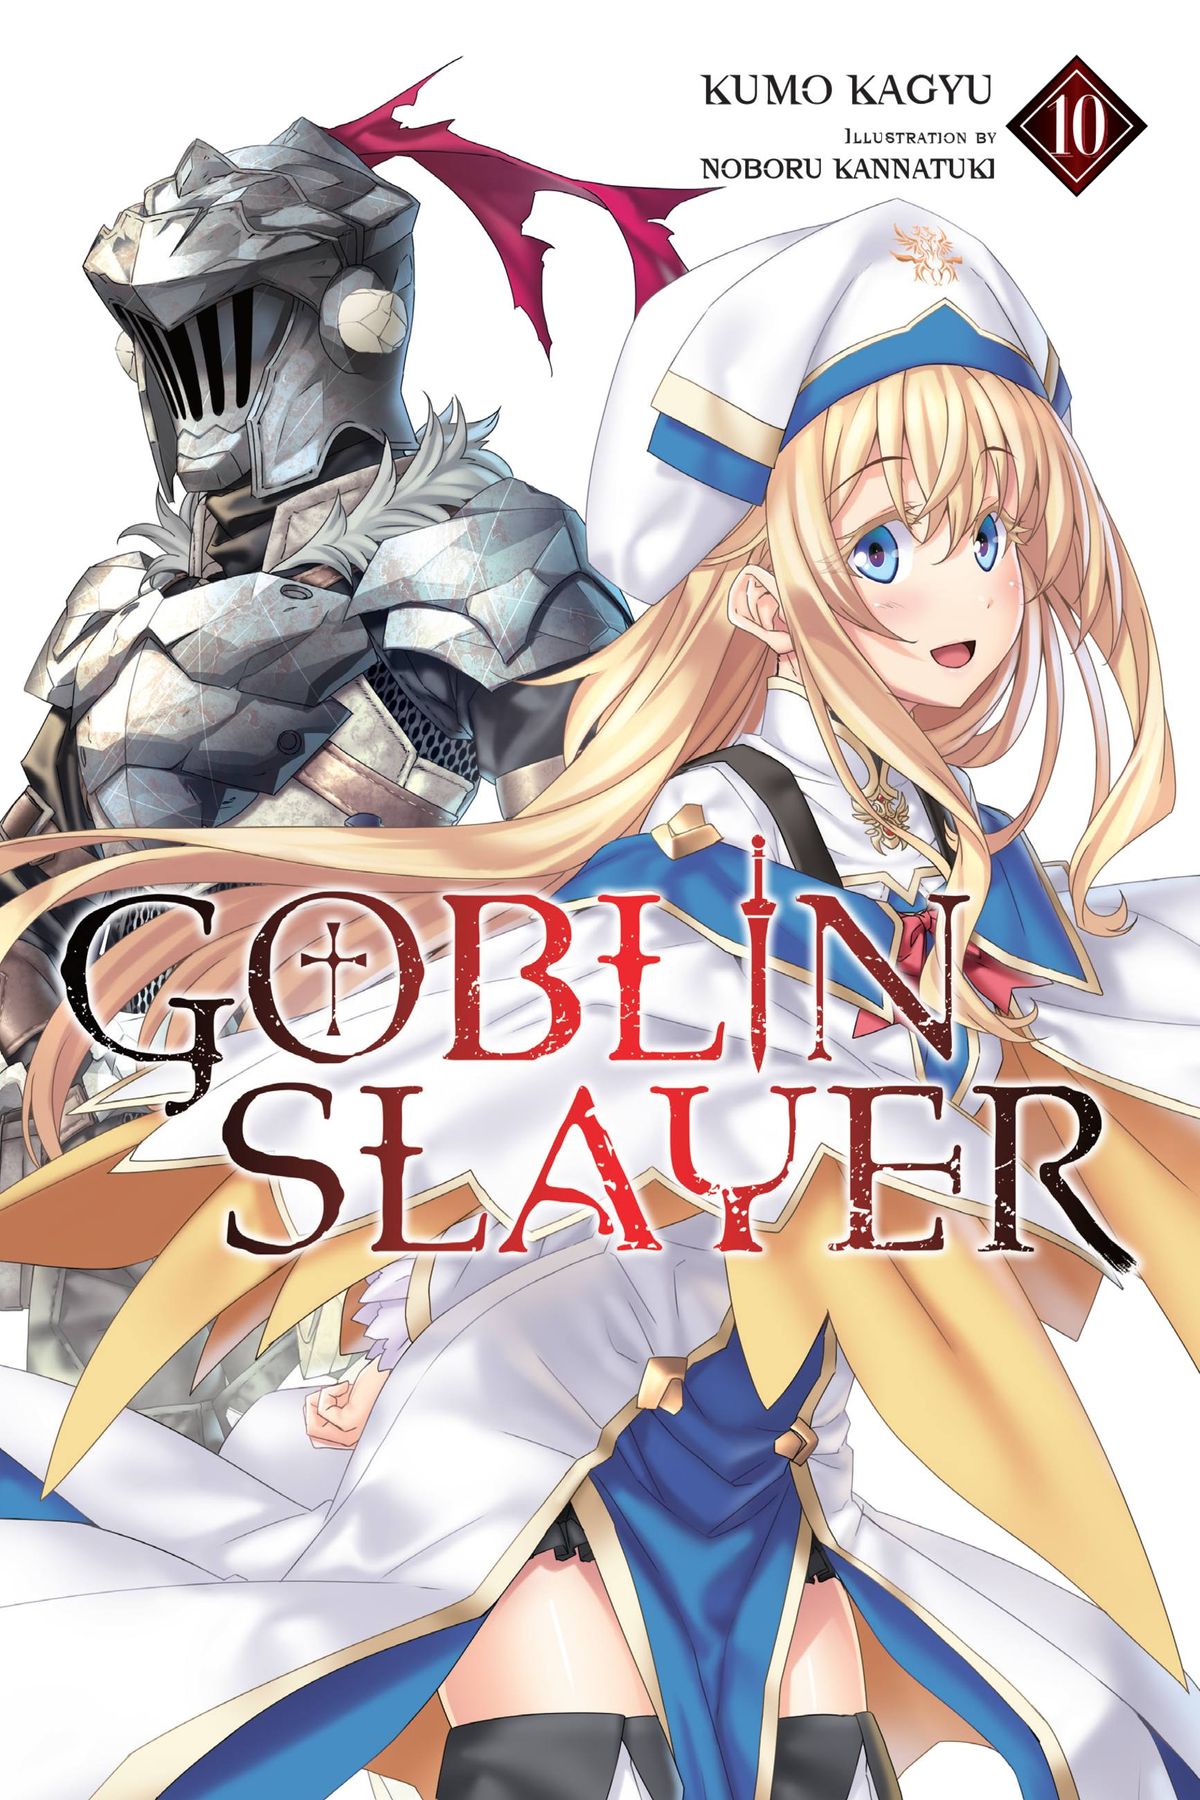 Manga Volume 10, Goblin Slayer Wiki